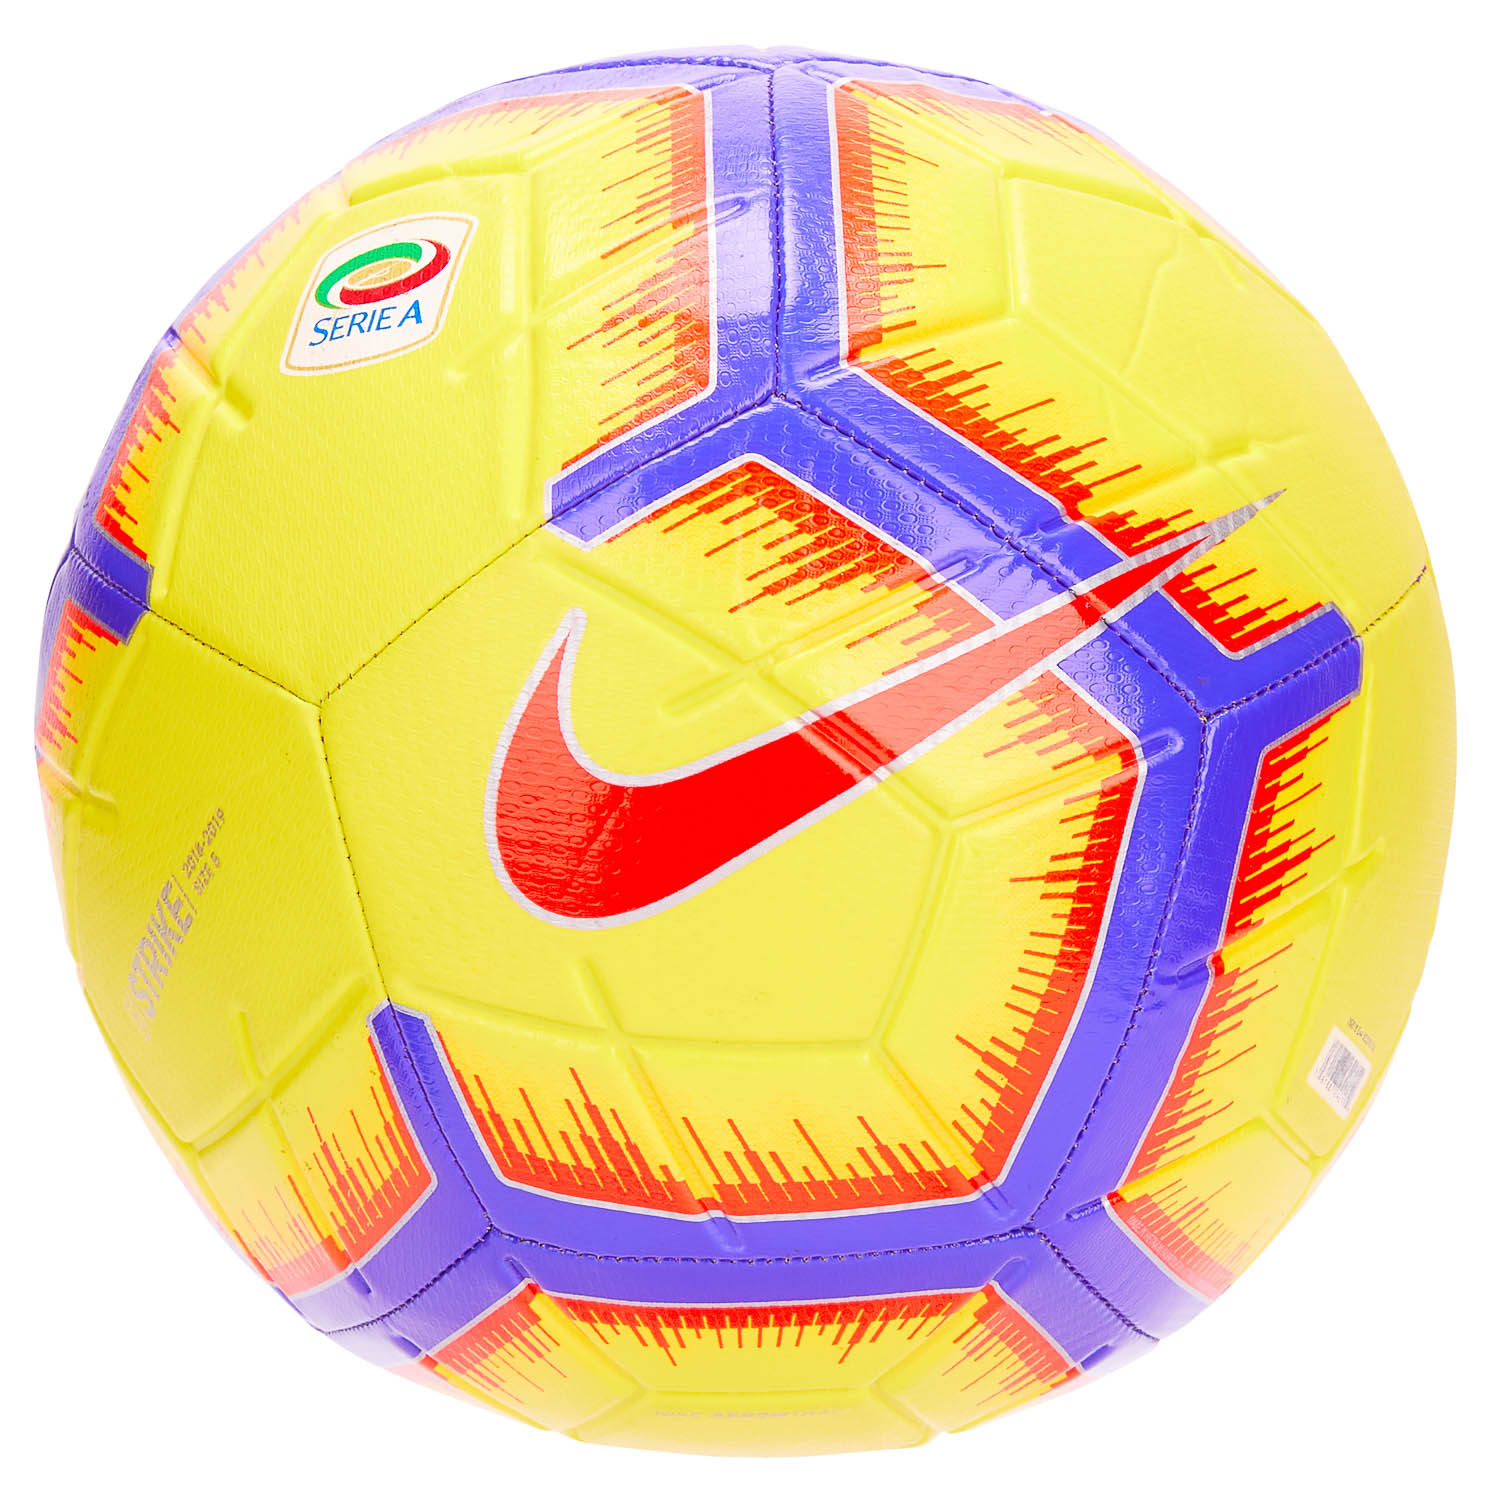 Posdata monte Vesubio toda la vida 2018-19 Nike Strike Serie A Winter Ball - NEW - (Size 5)